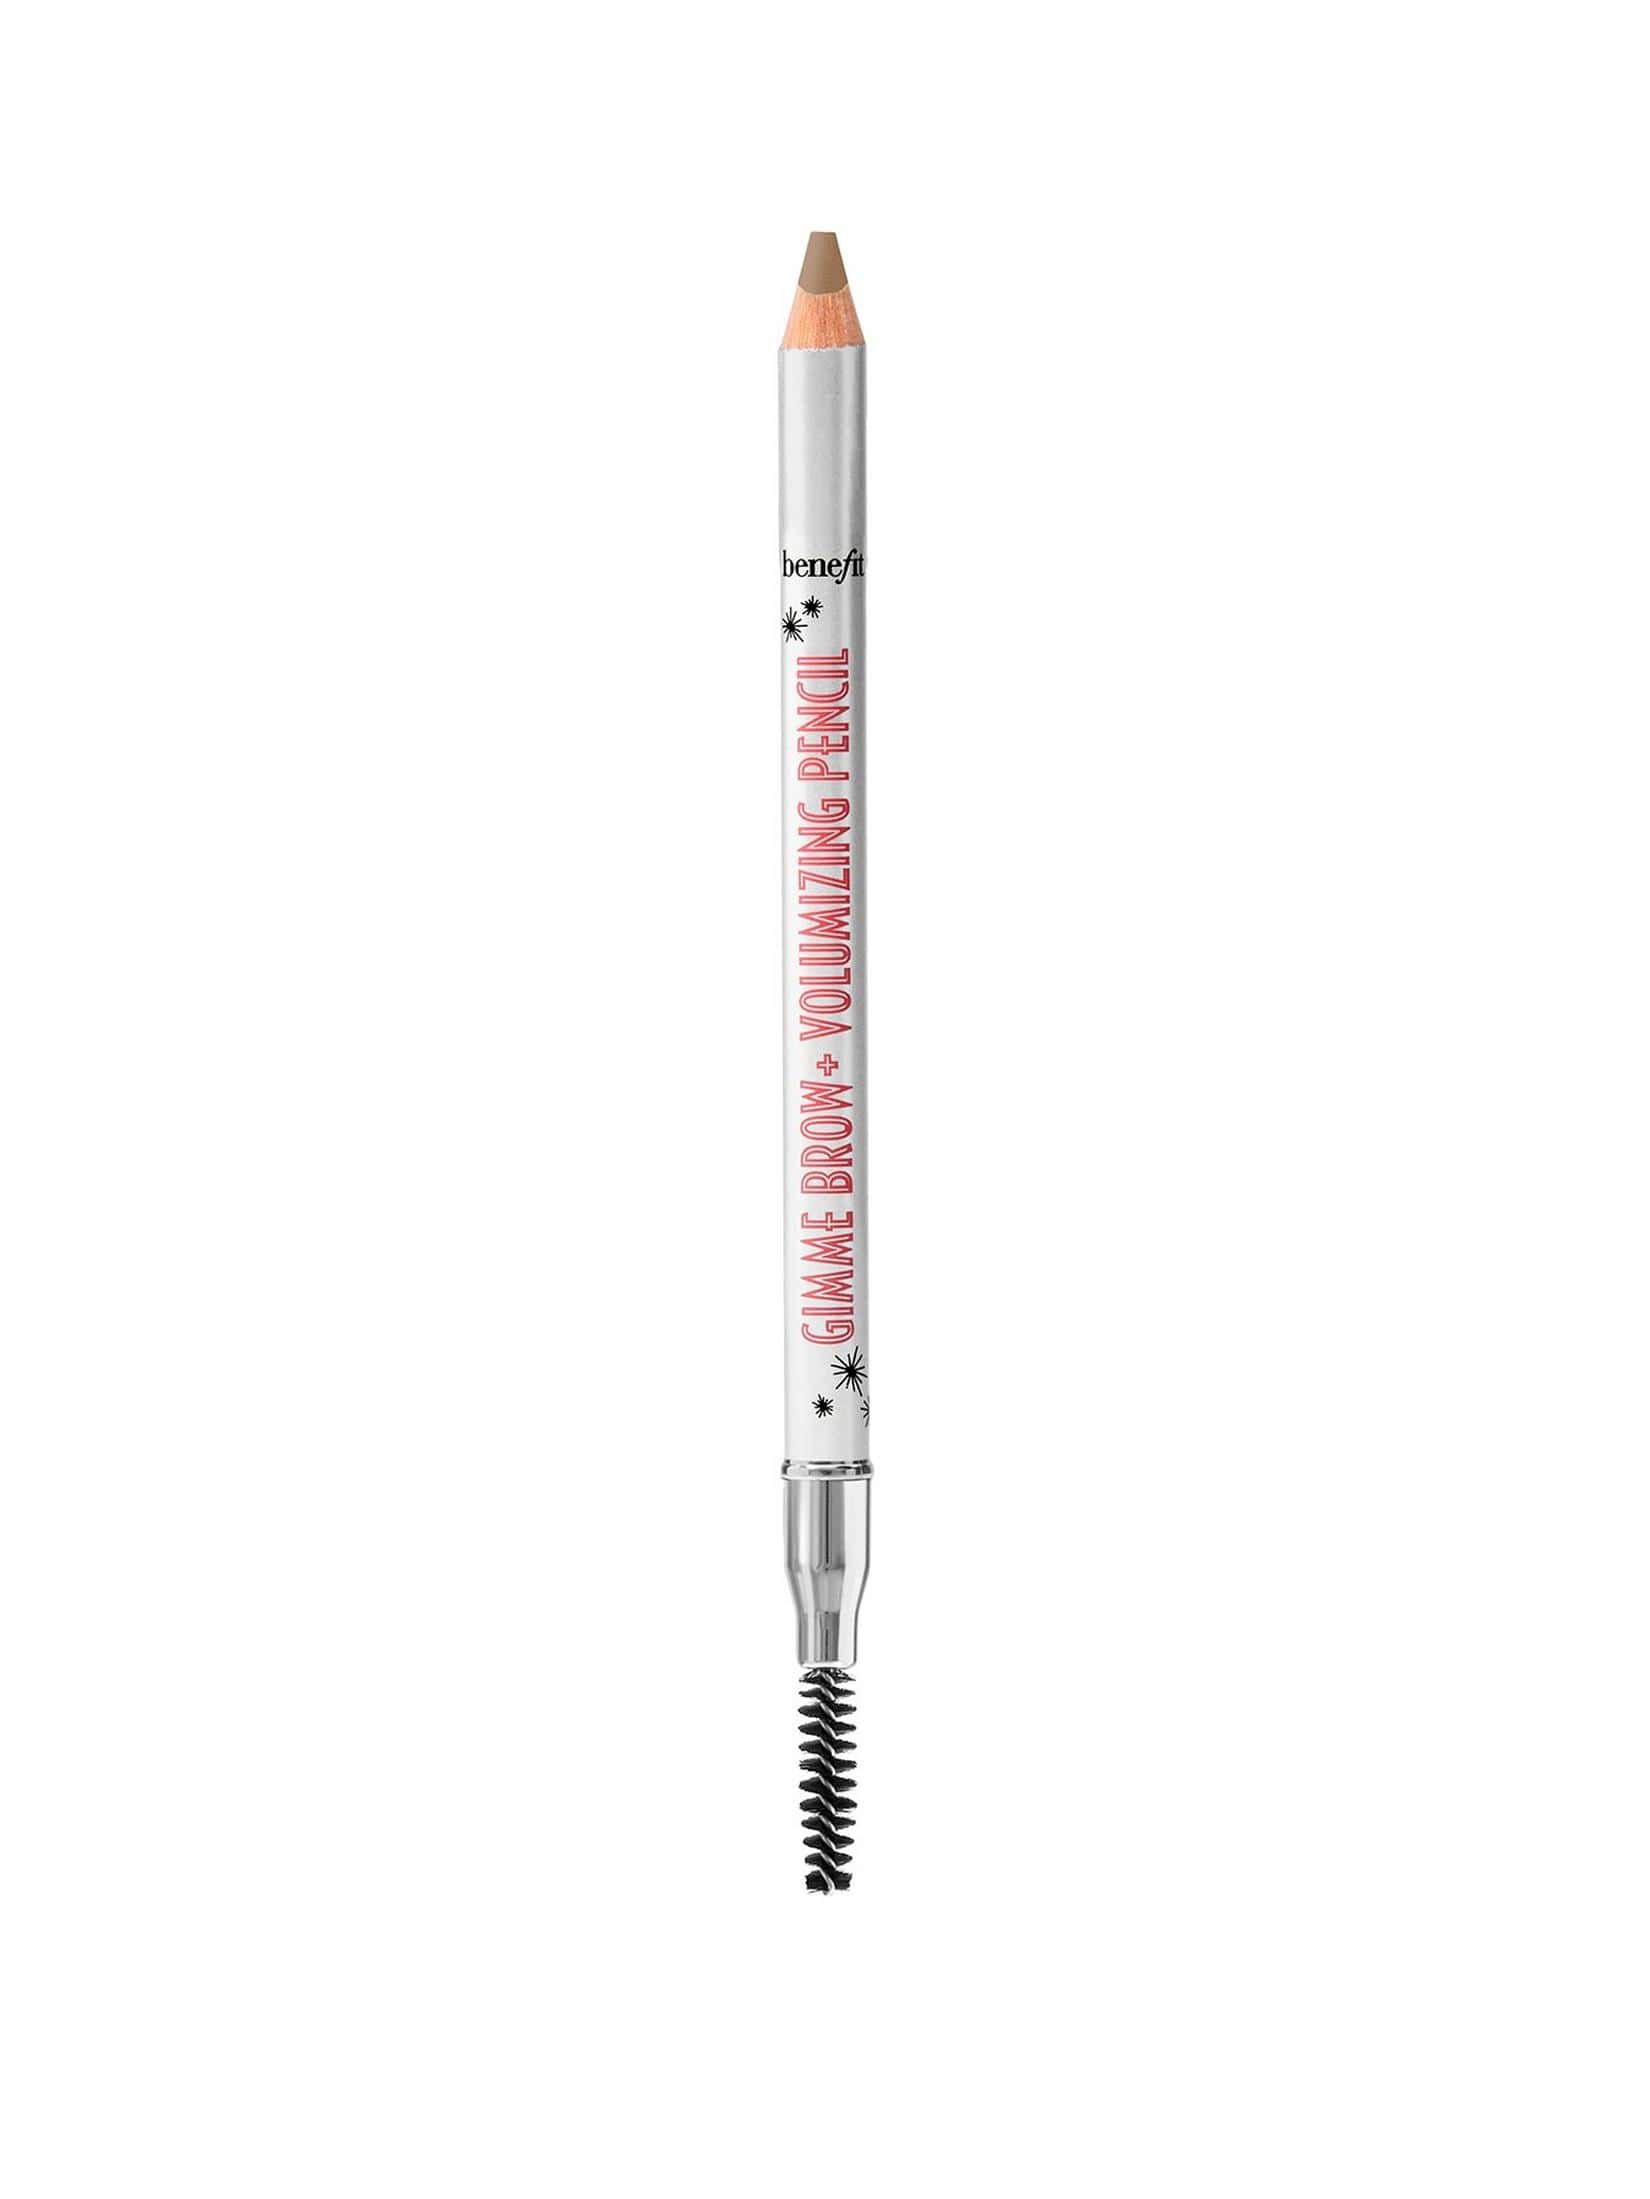 Benefit Eyebrow Pencil, 01, to thicken eyebrows